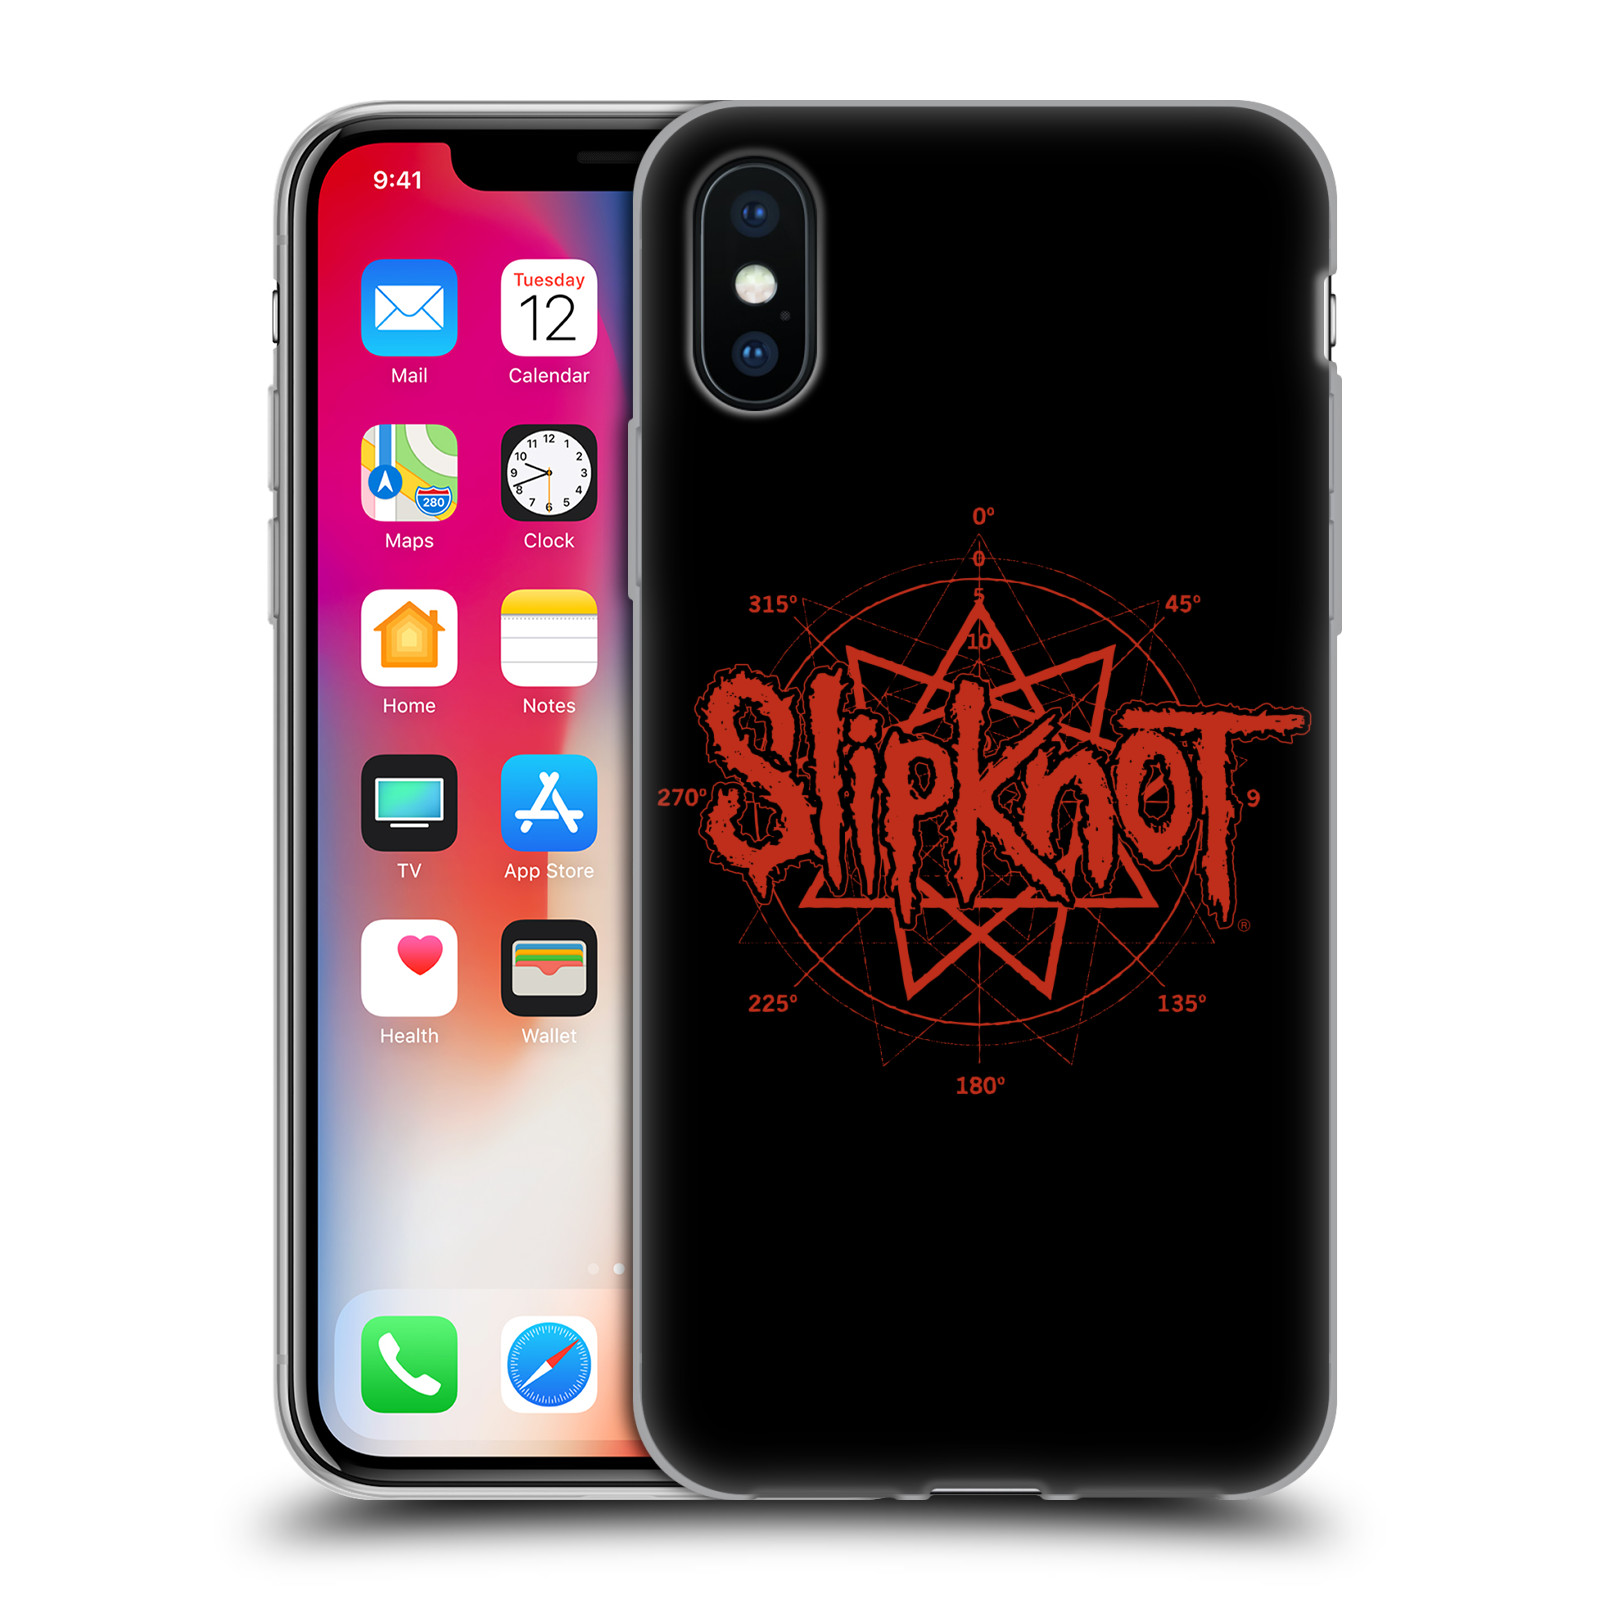 HEAD CASE silikonový obal na mobil Apple Iphone X hudební skupina Slipknot logo